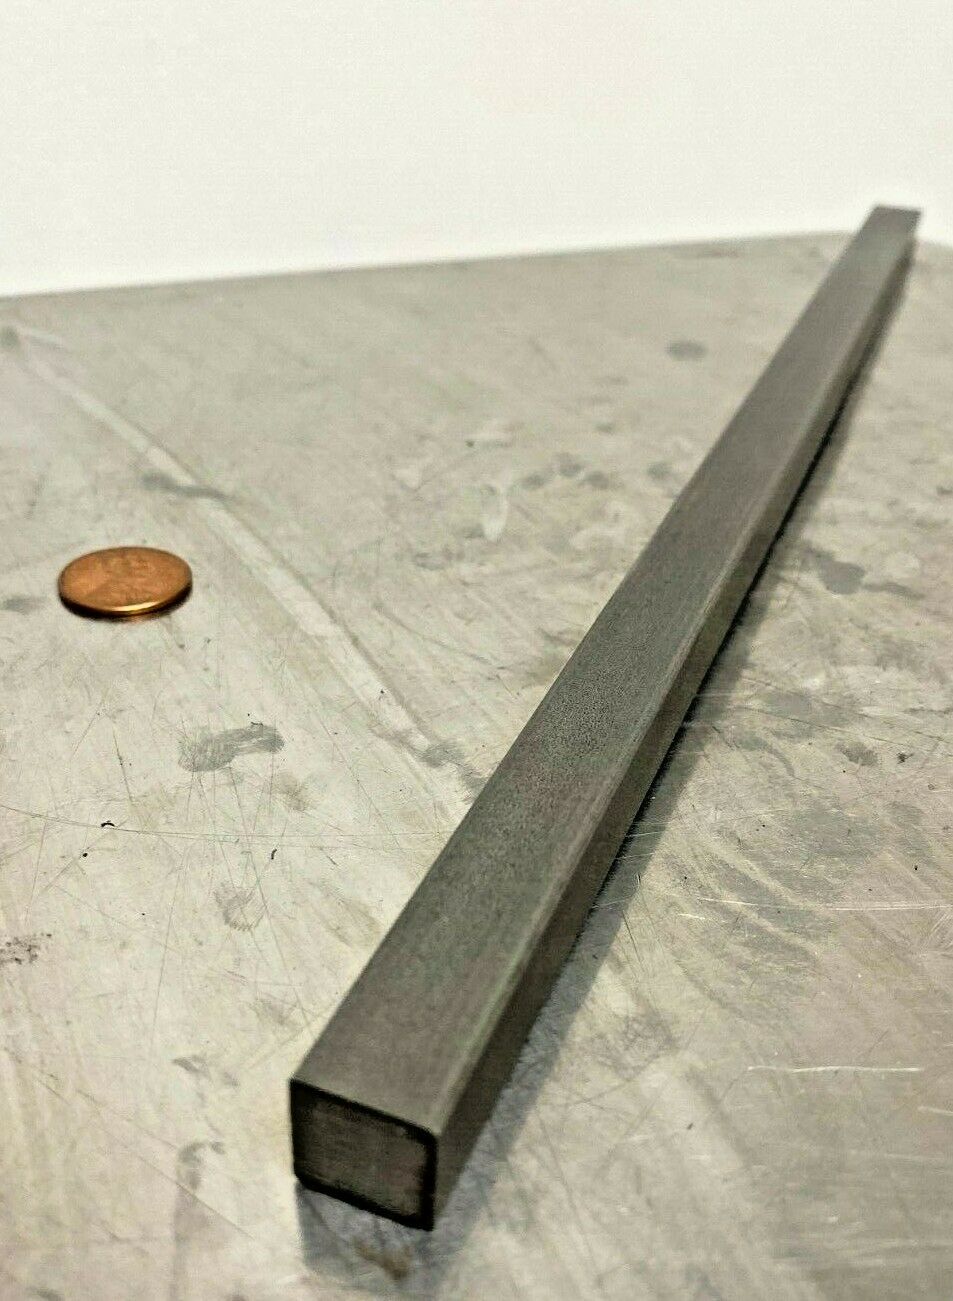 12l14 Square Carbon Steel Bars, 1/2" Square X 12" Length